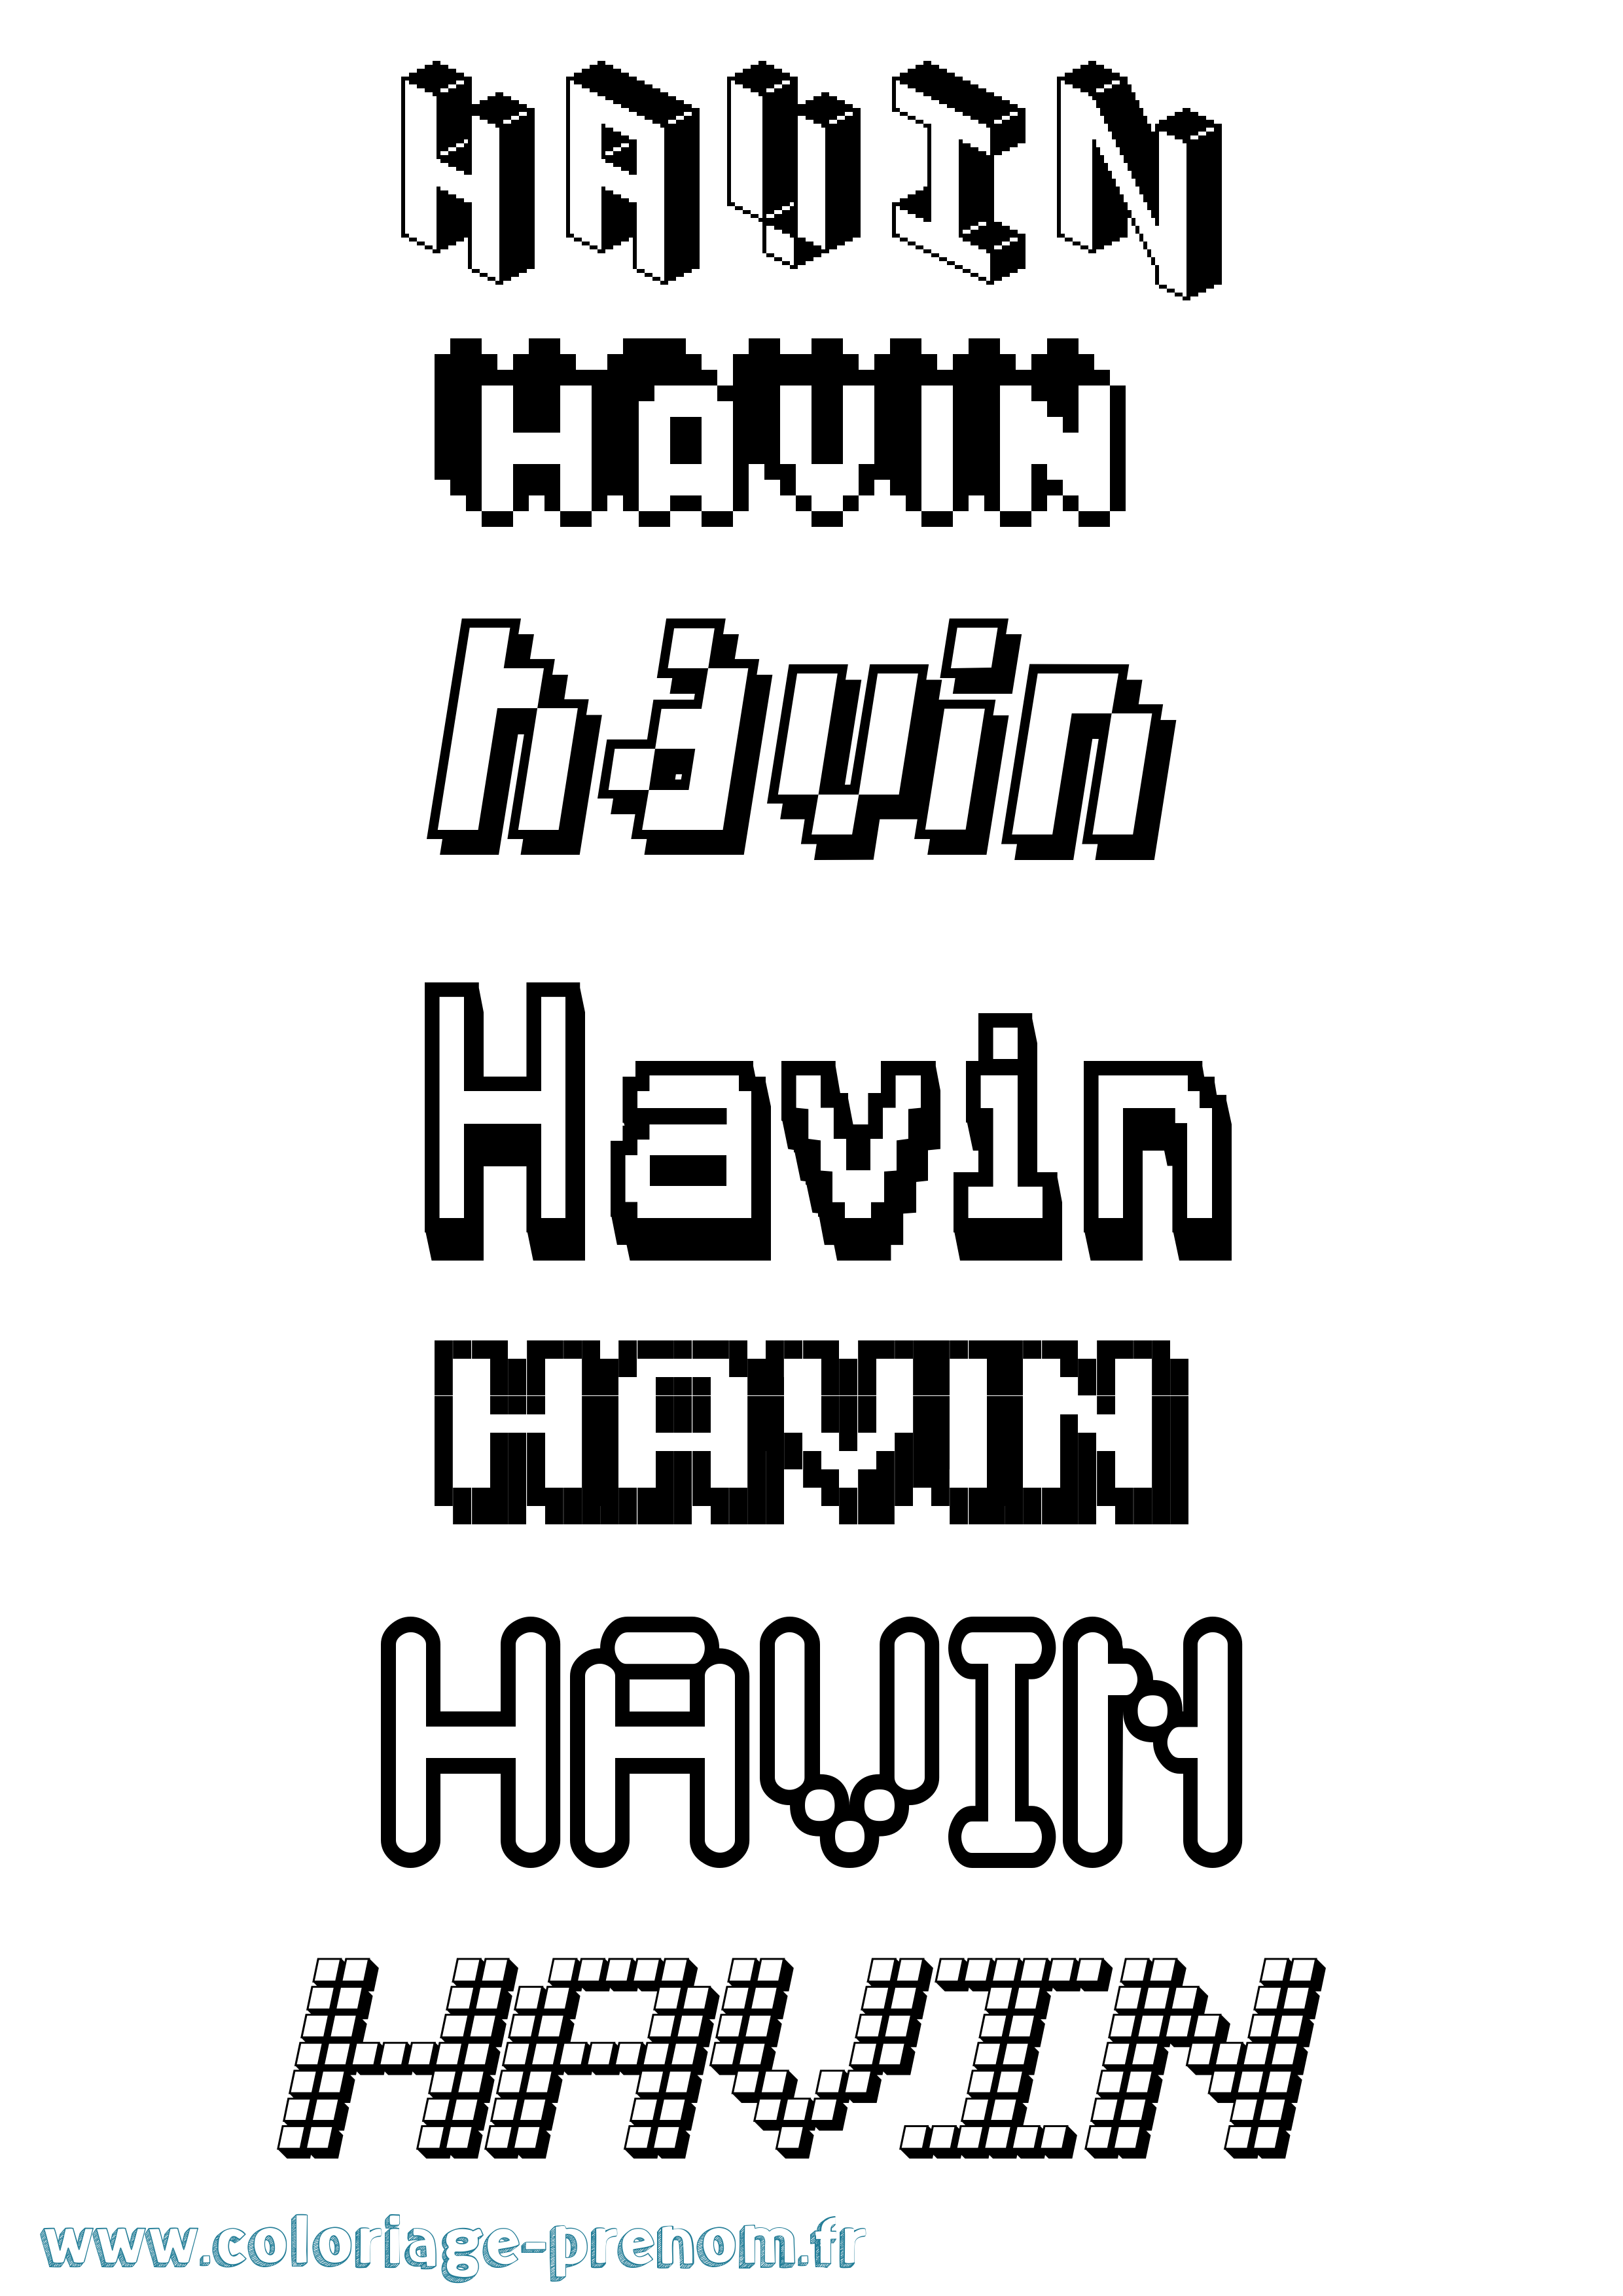 Coloriage prénom Havin Pixel